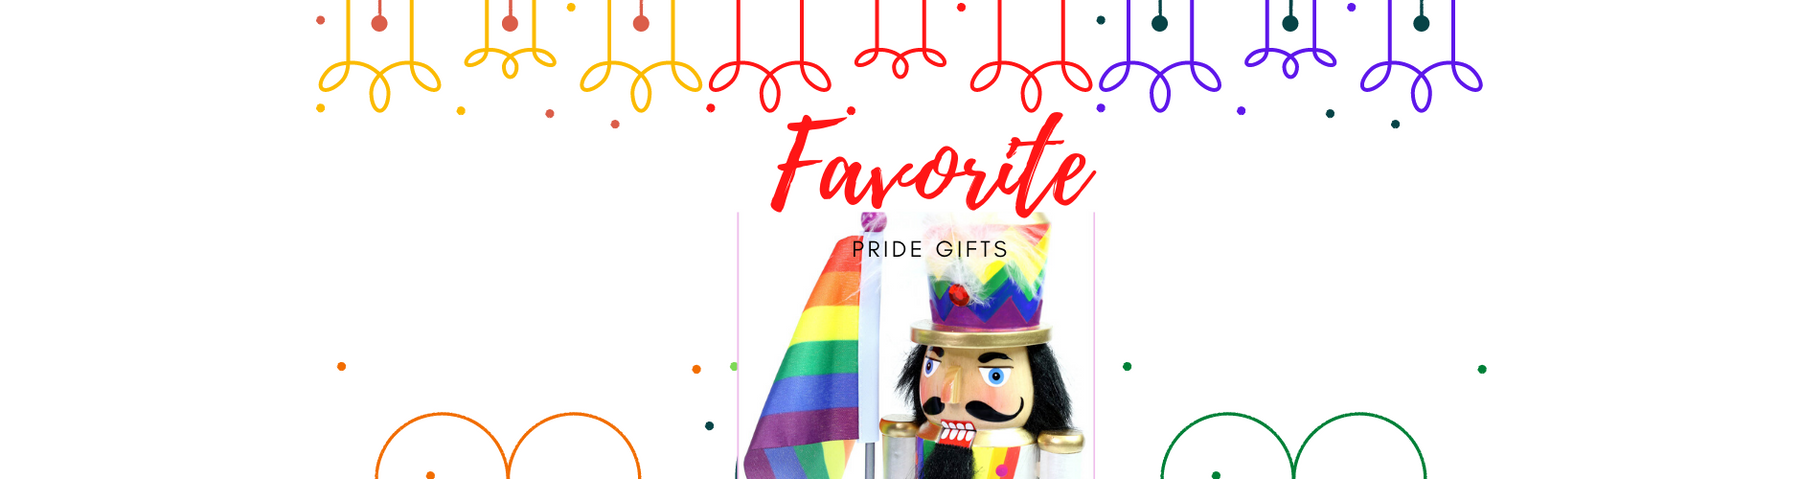 Favorite Pride Gifts